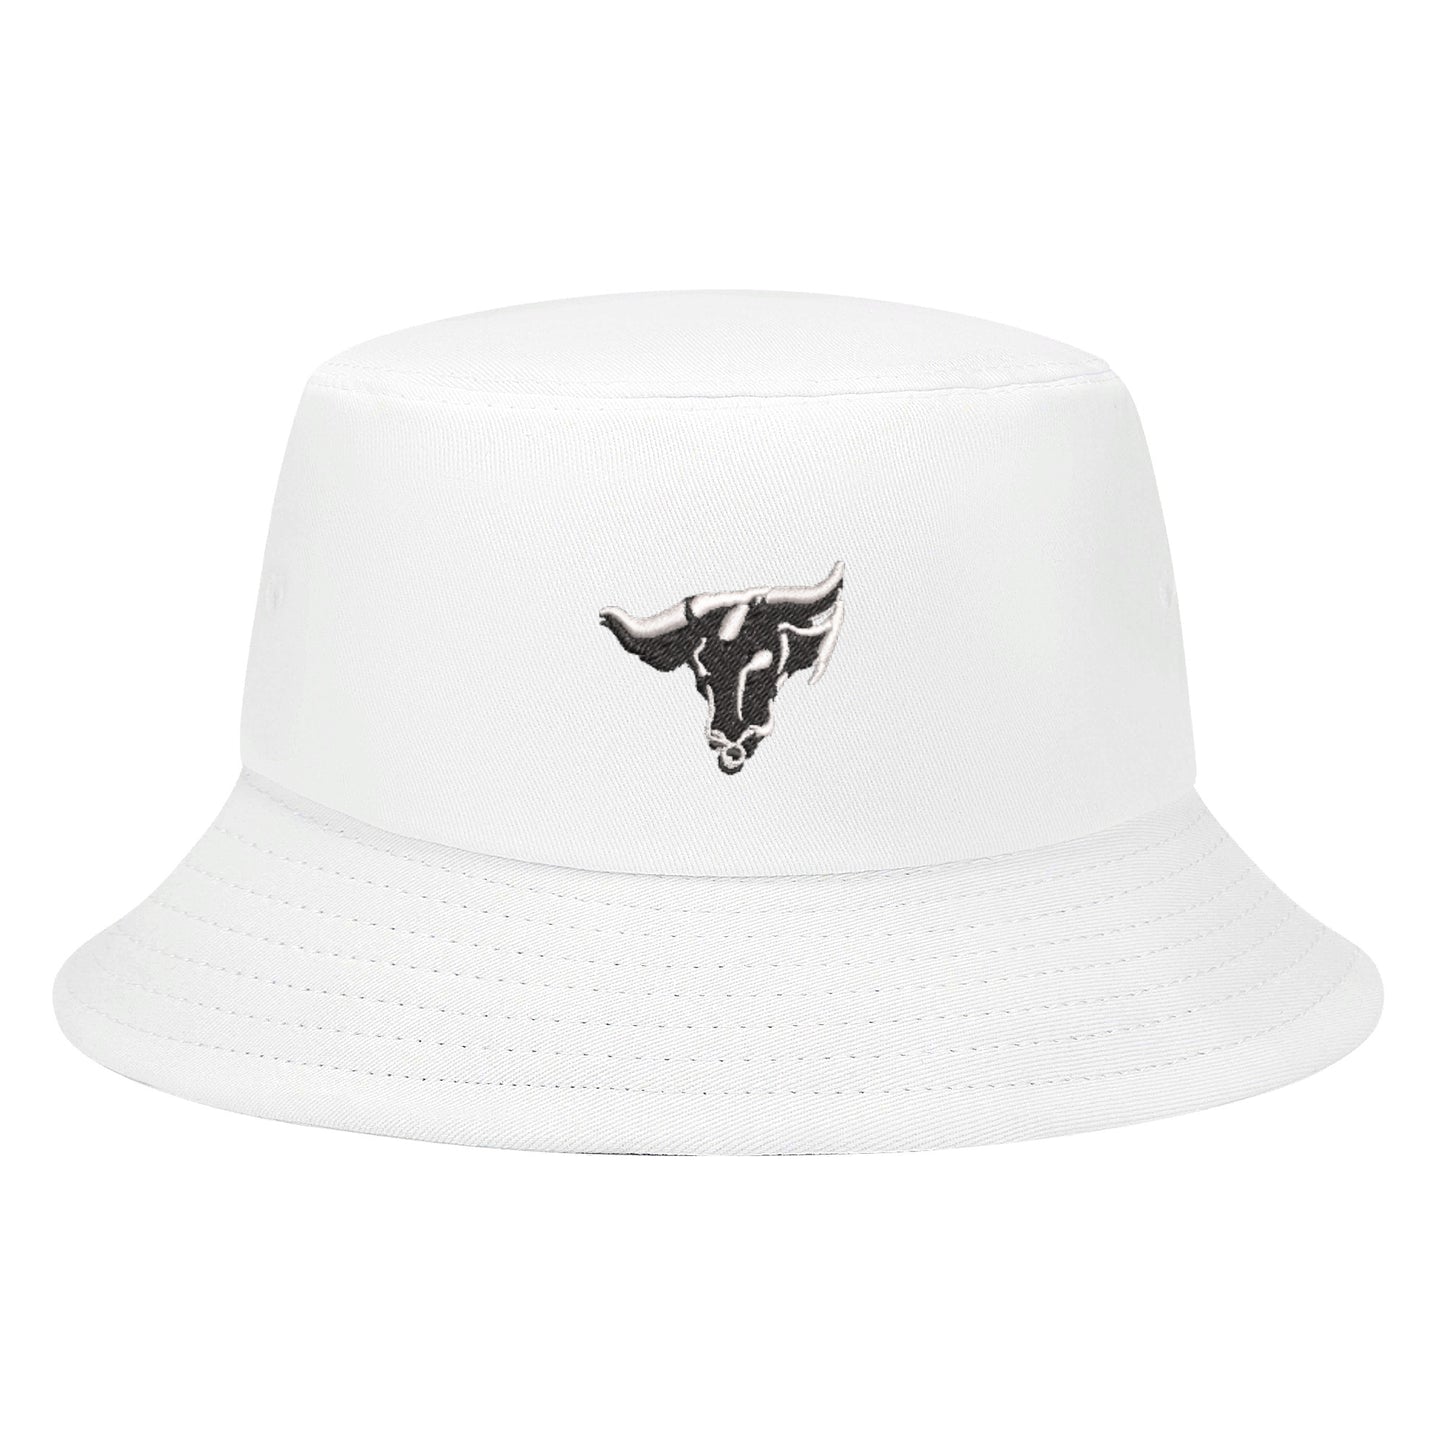 fz embroidered bucket hats white / universal